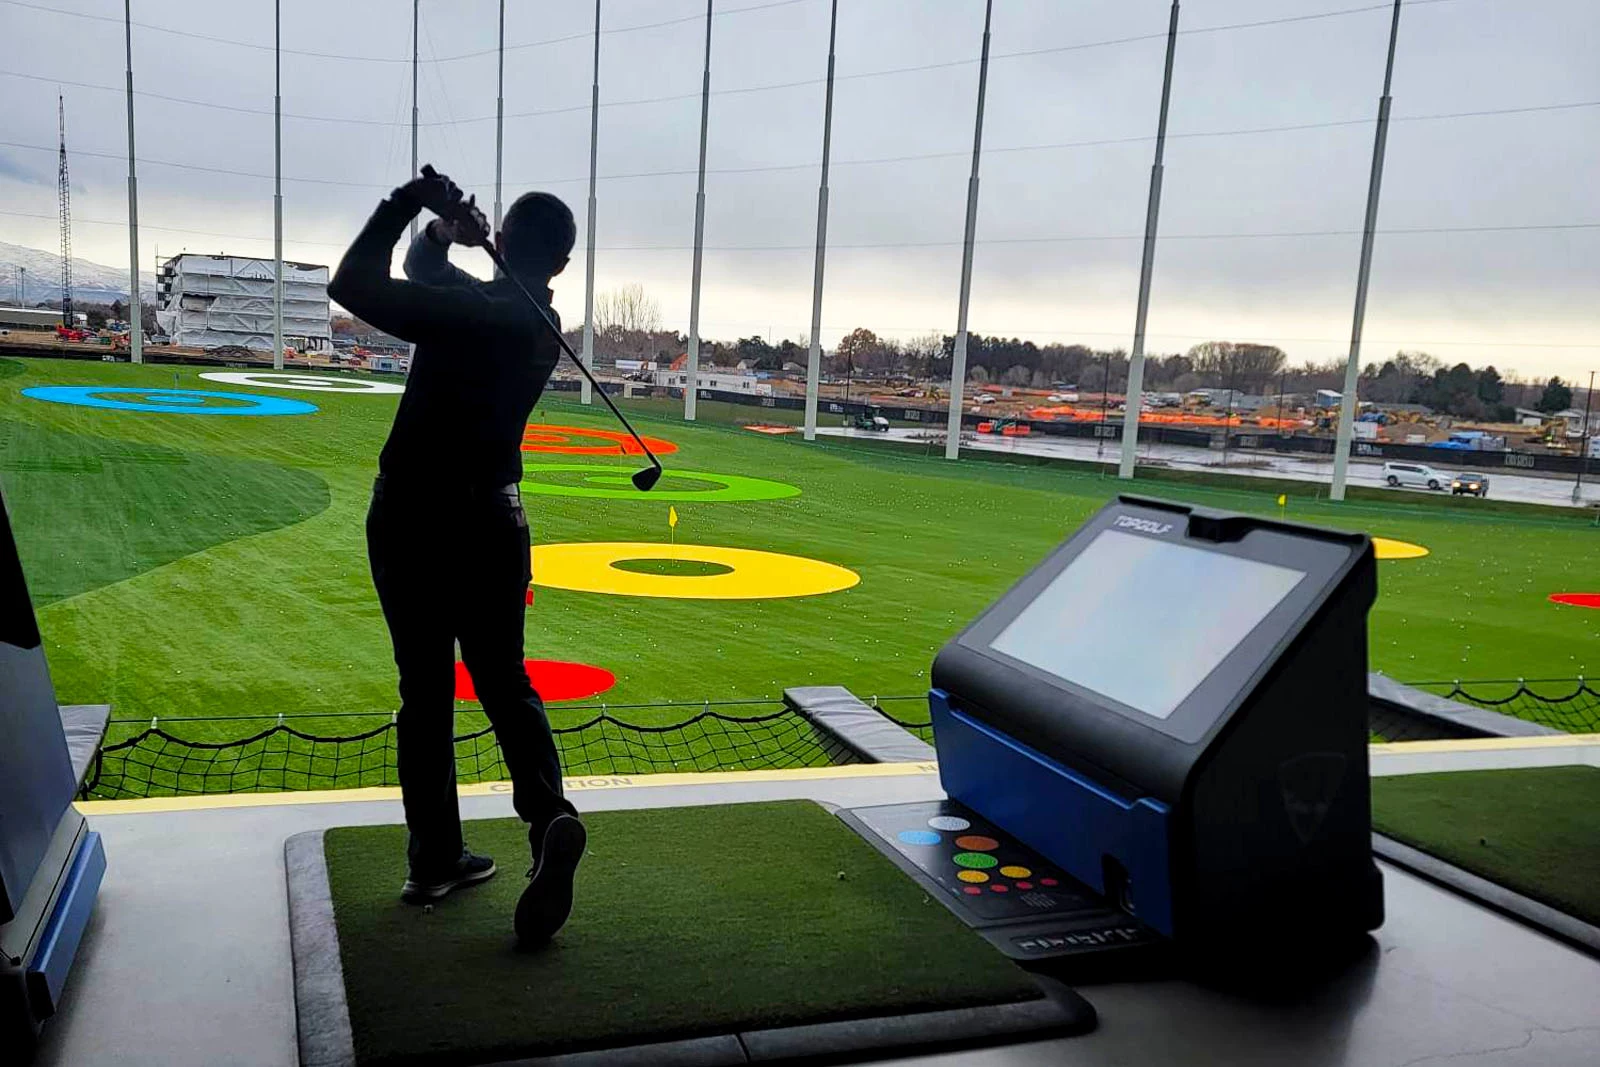 Topgolf teases interest in Boise, ID area golf entertainment venue